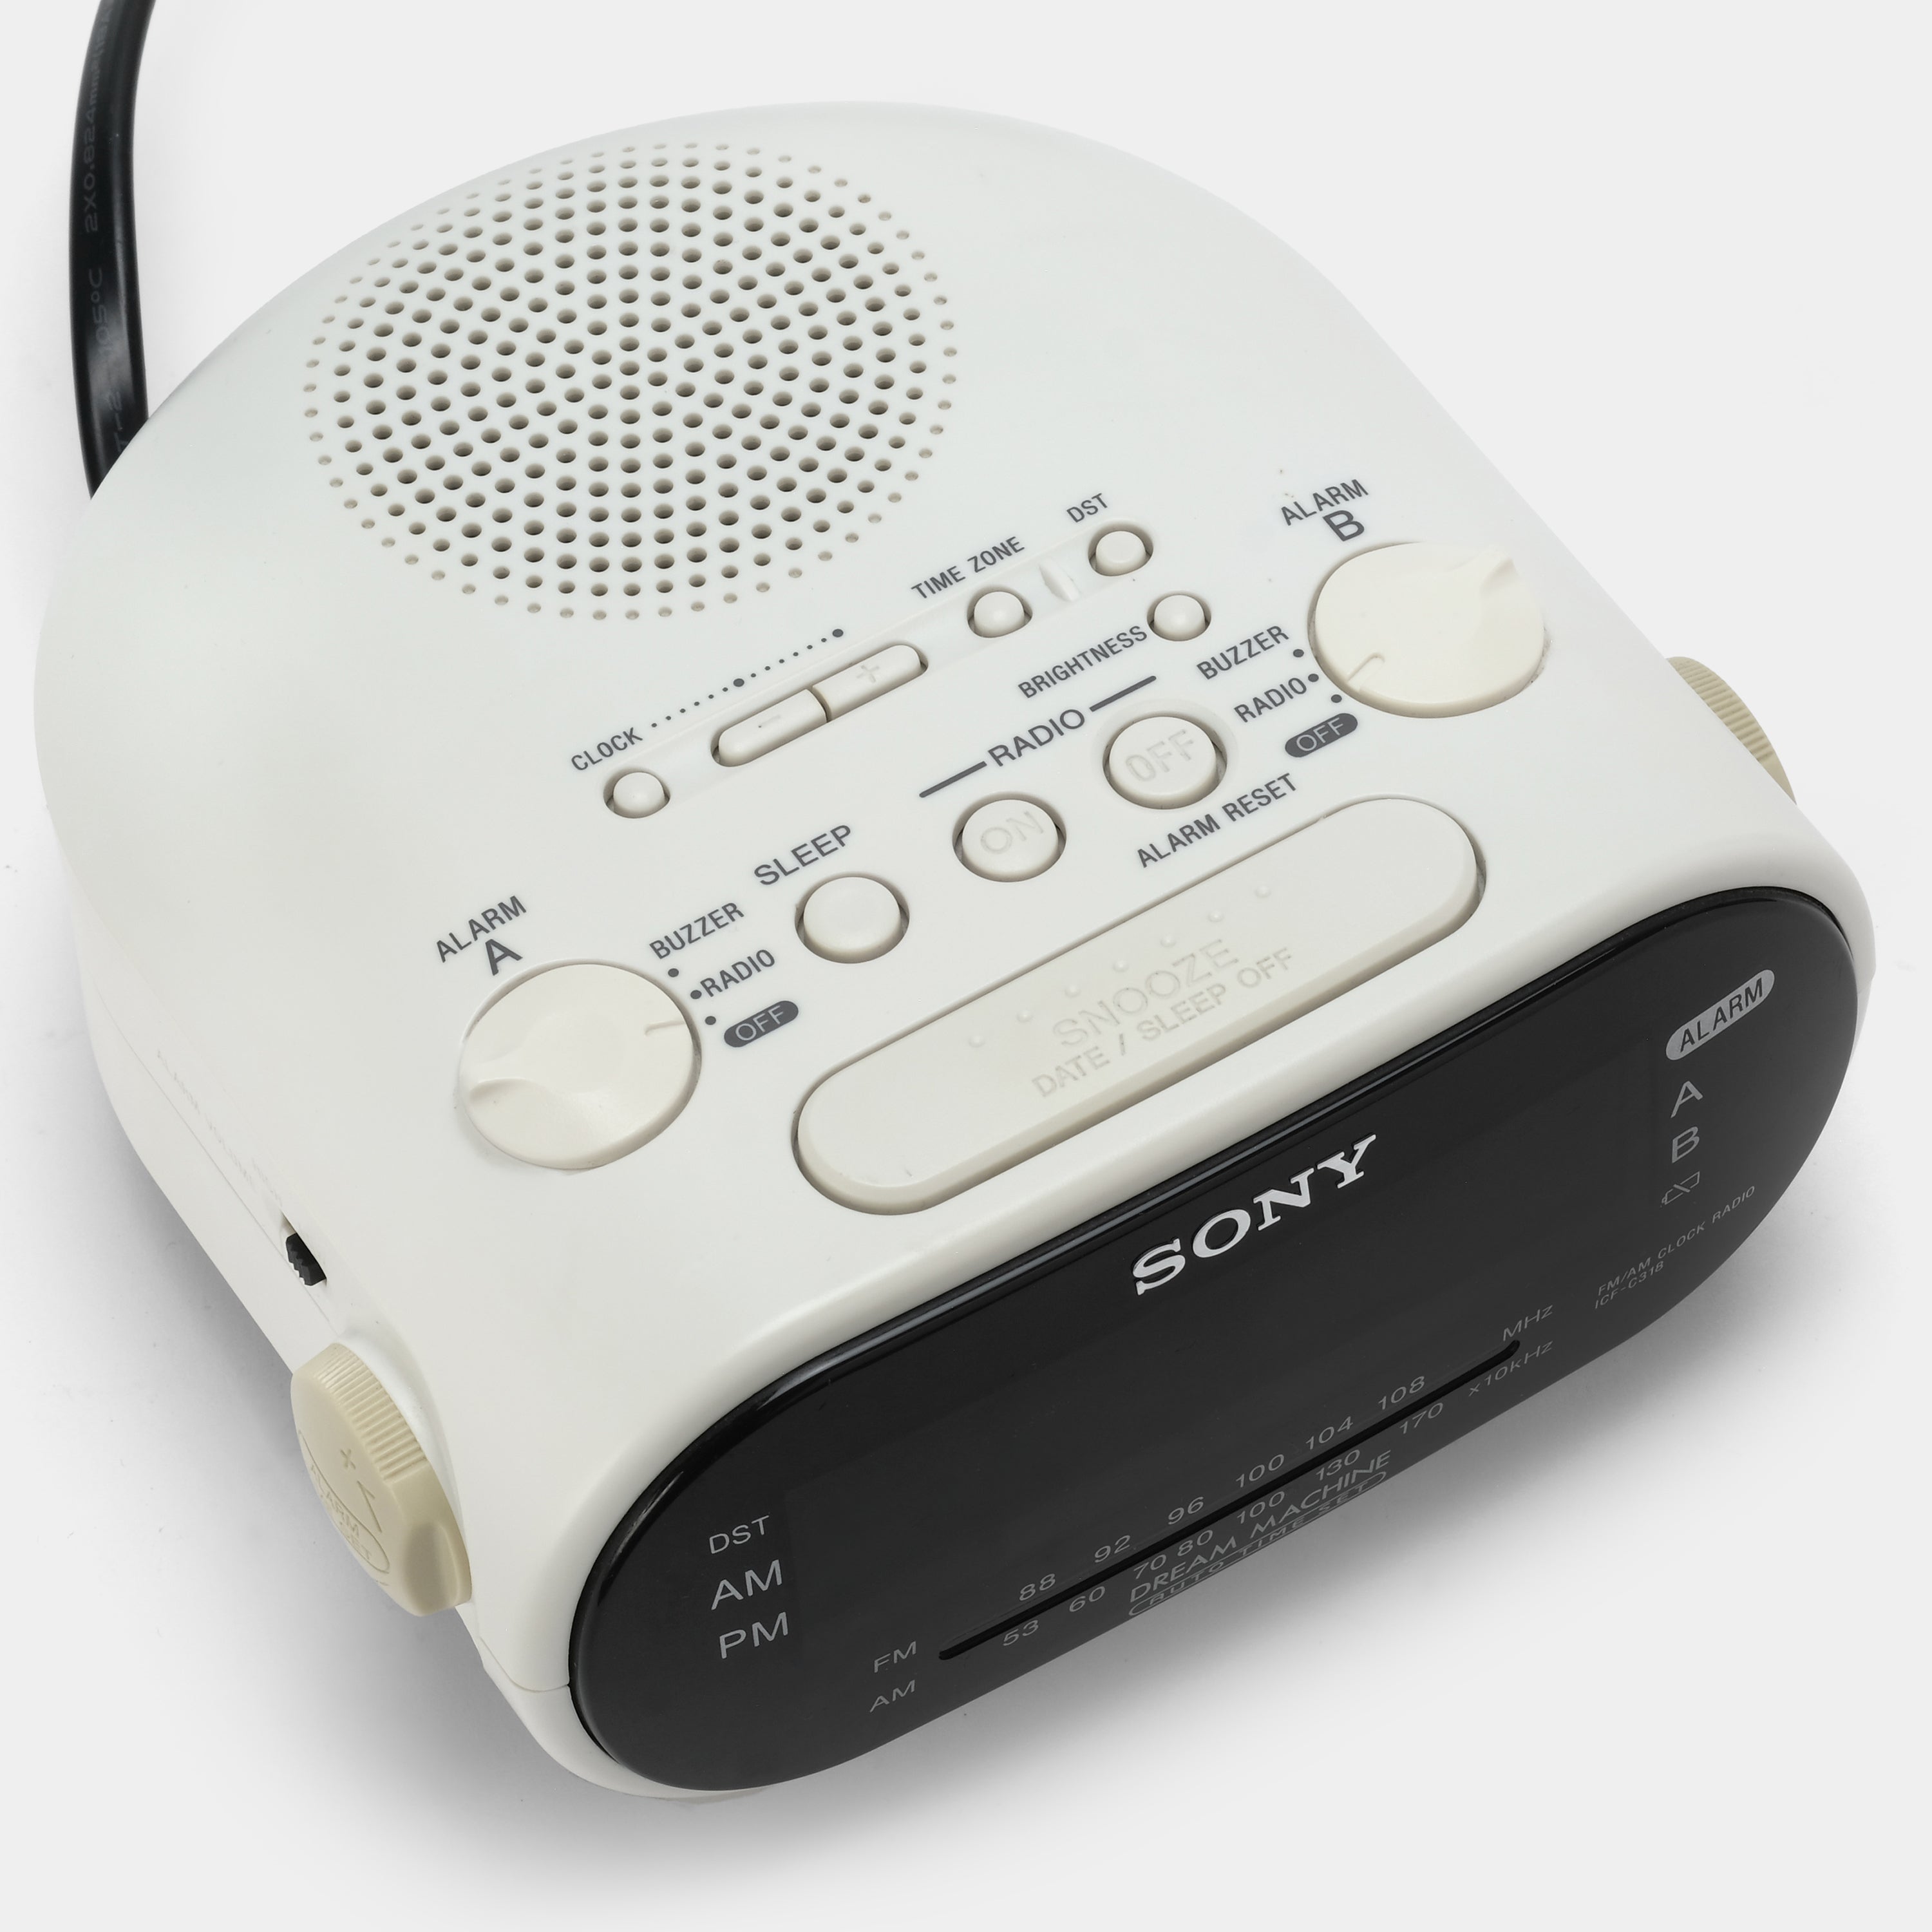 Sony ICF-C318 Dream Machine Alarm Clock Radio